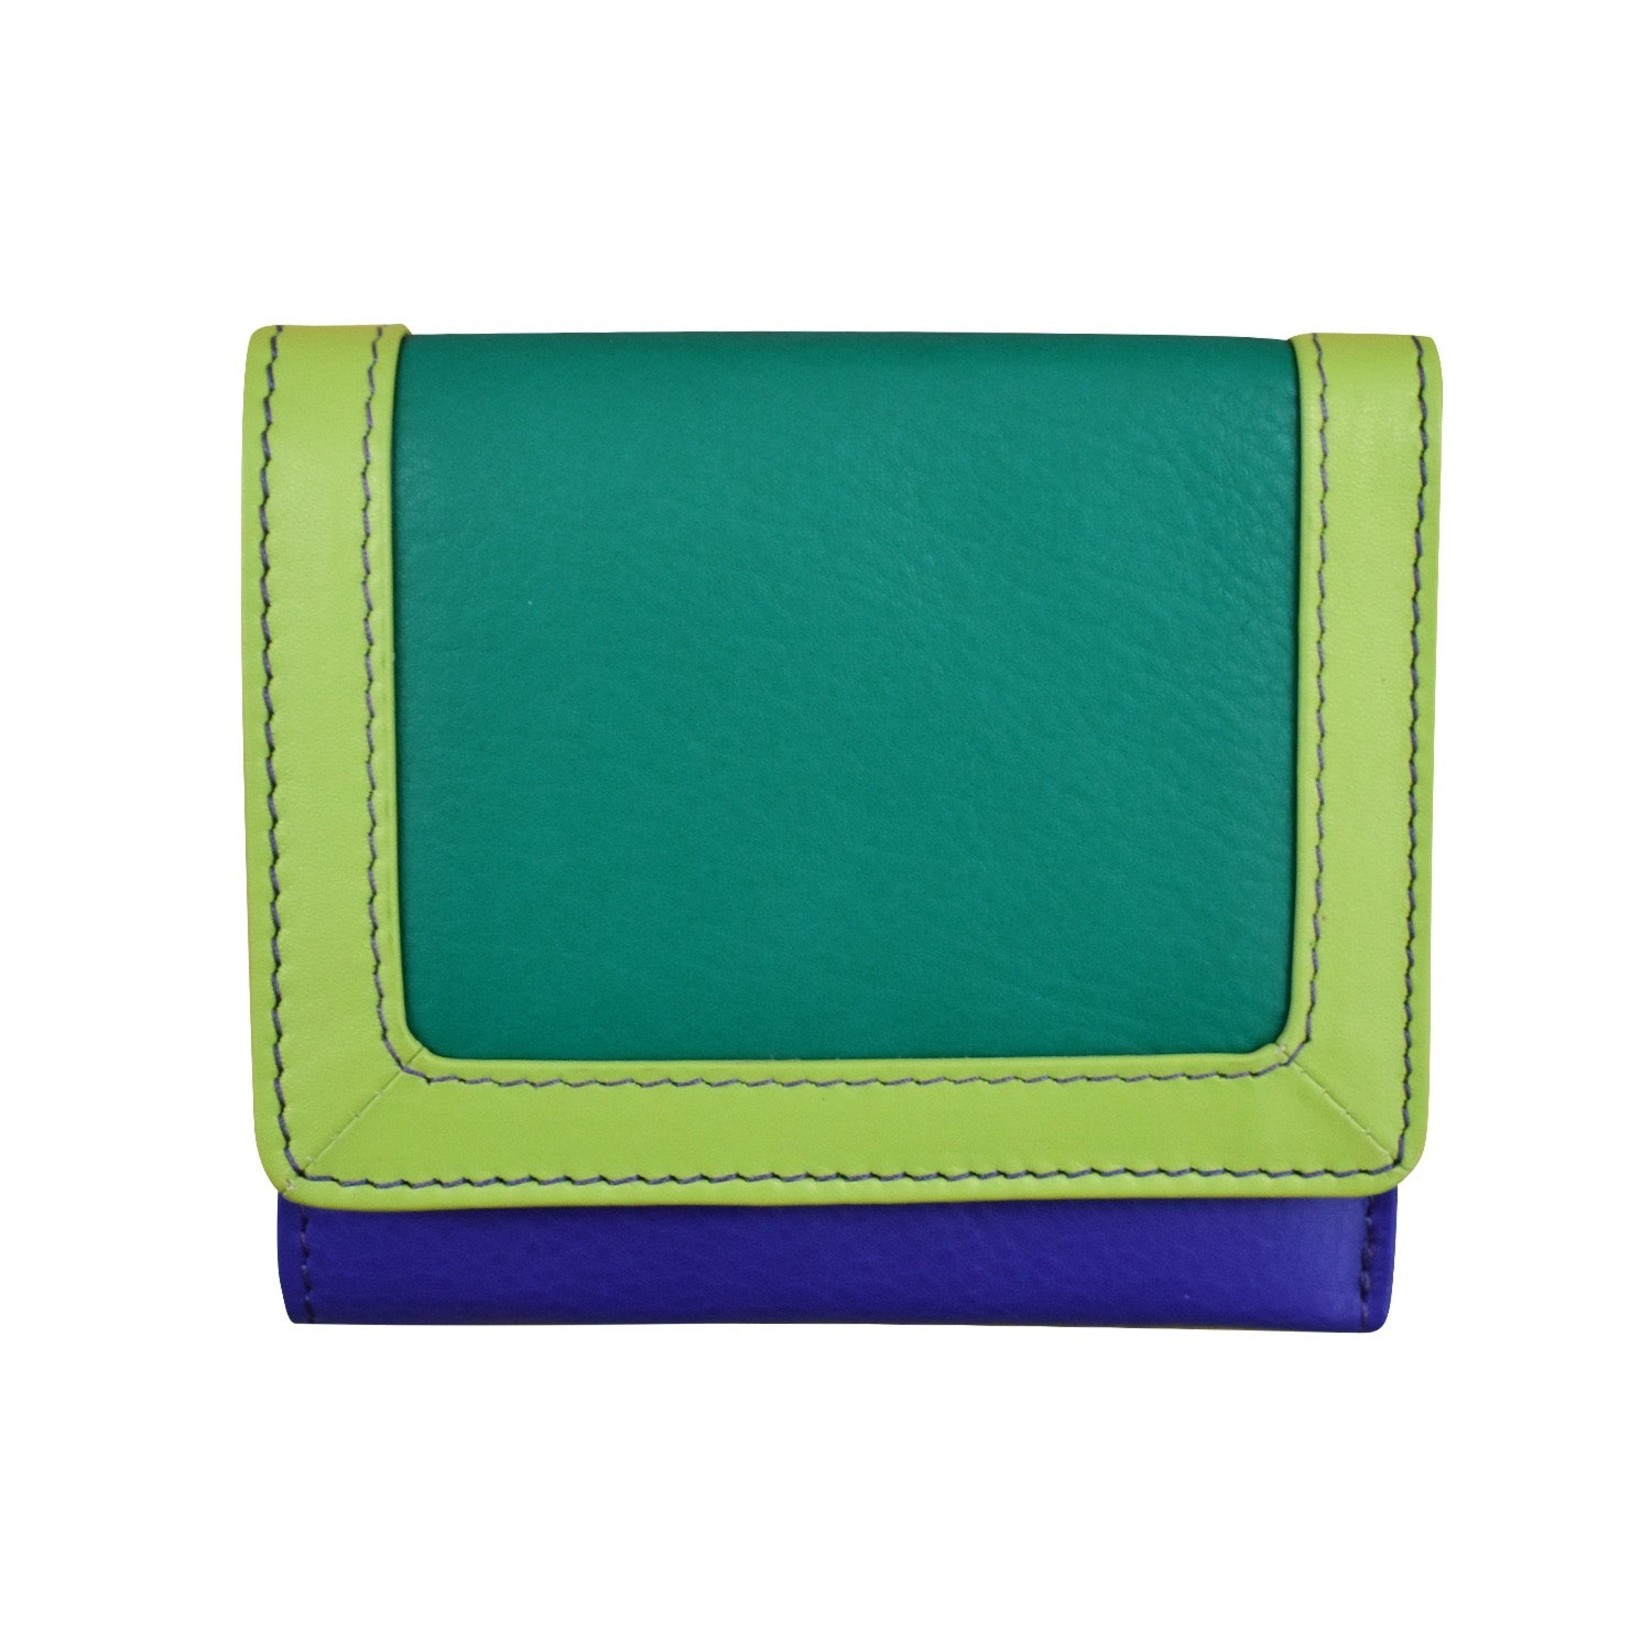 Leather Handbags and Accessories 7824 Cool Tropics - RFID Tri-fold Color Block Mini Wallet